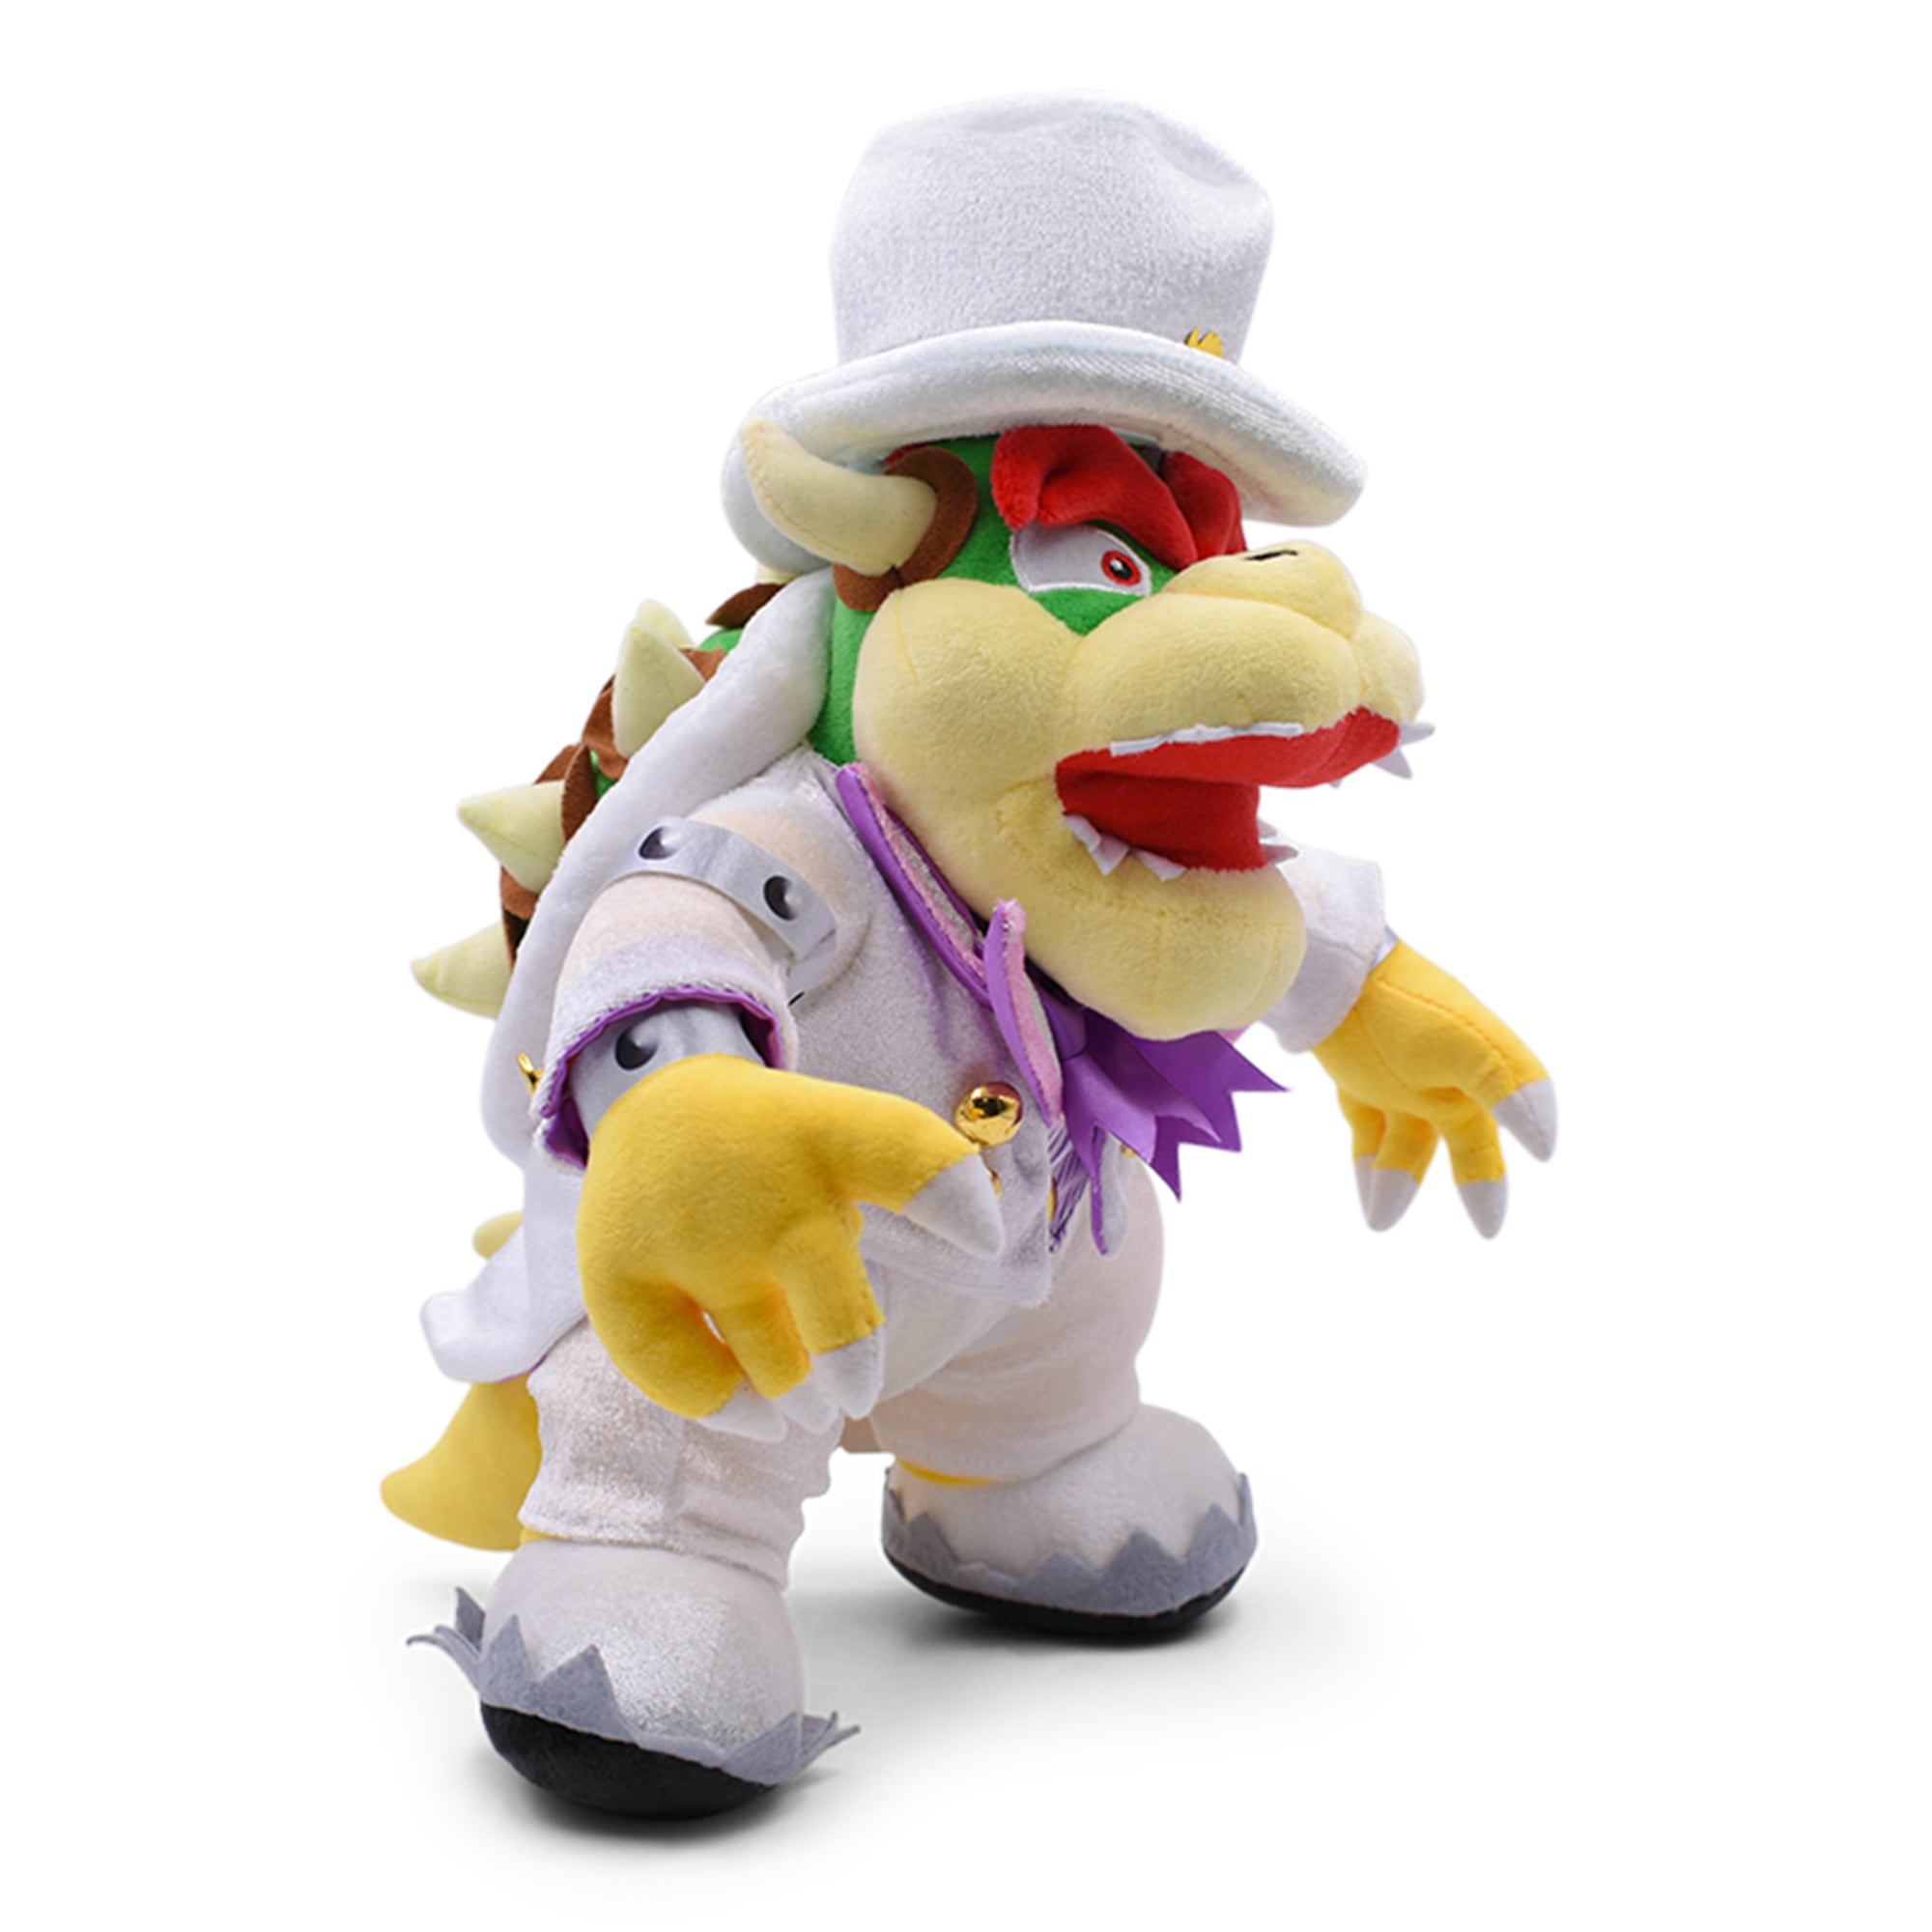 Super Mario Odyssey Plush Bowser Koopa 14" Wedding Dress Boss Stuffed Toy Doll 